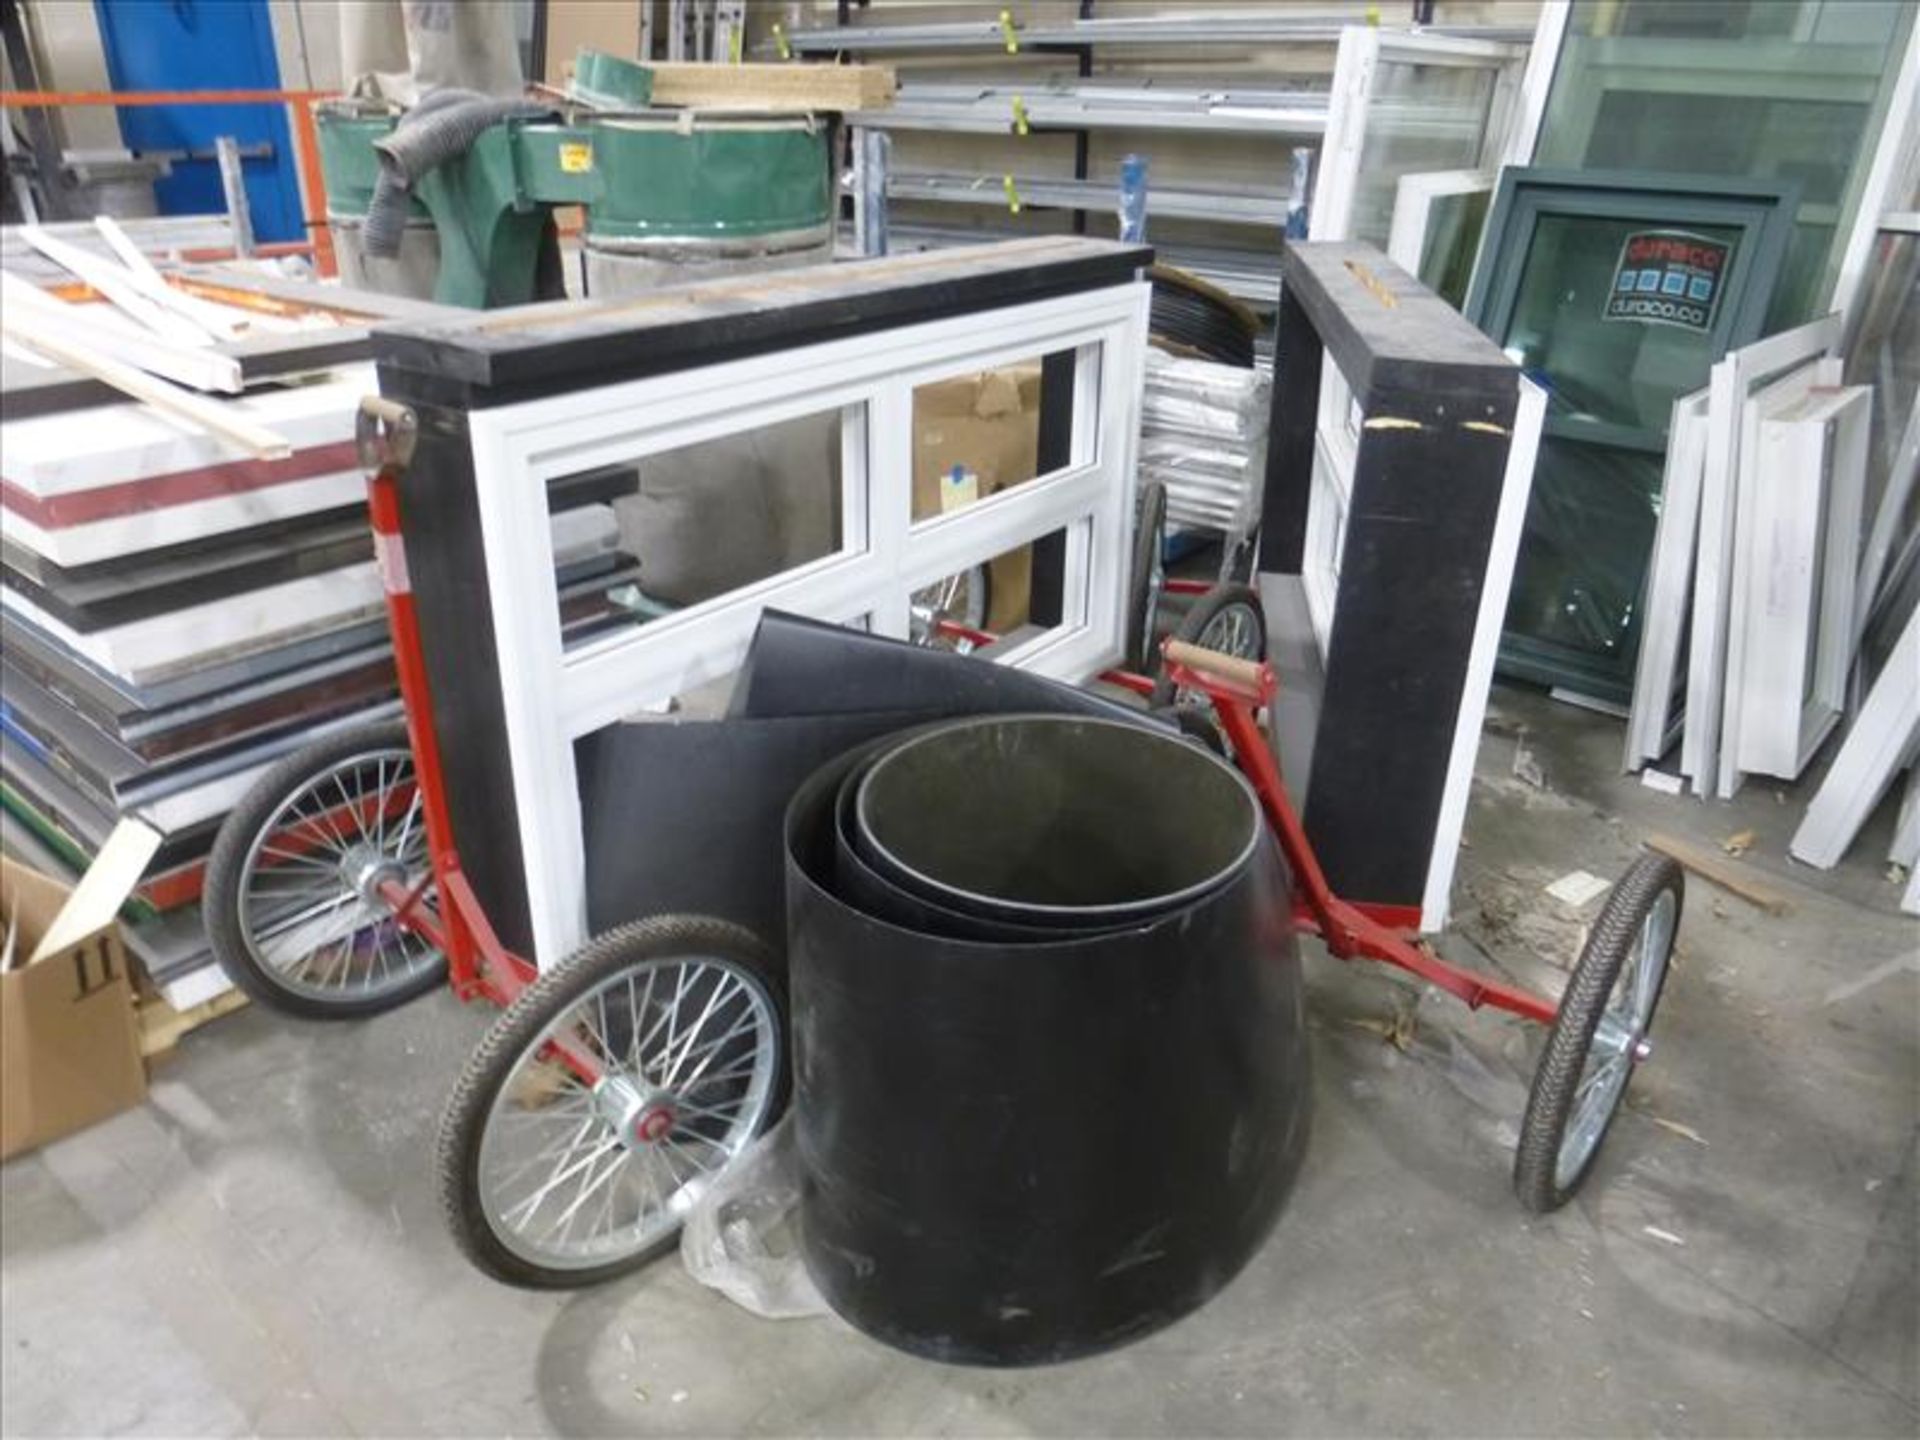 (2) window bike carts